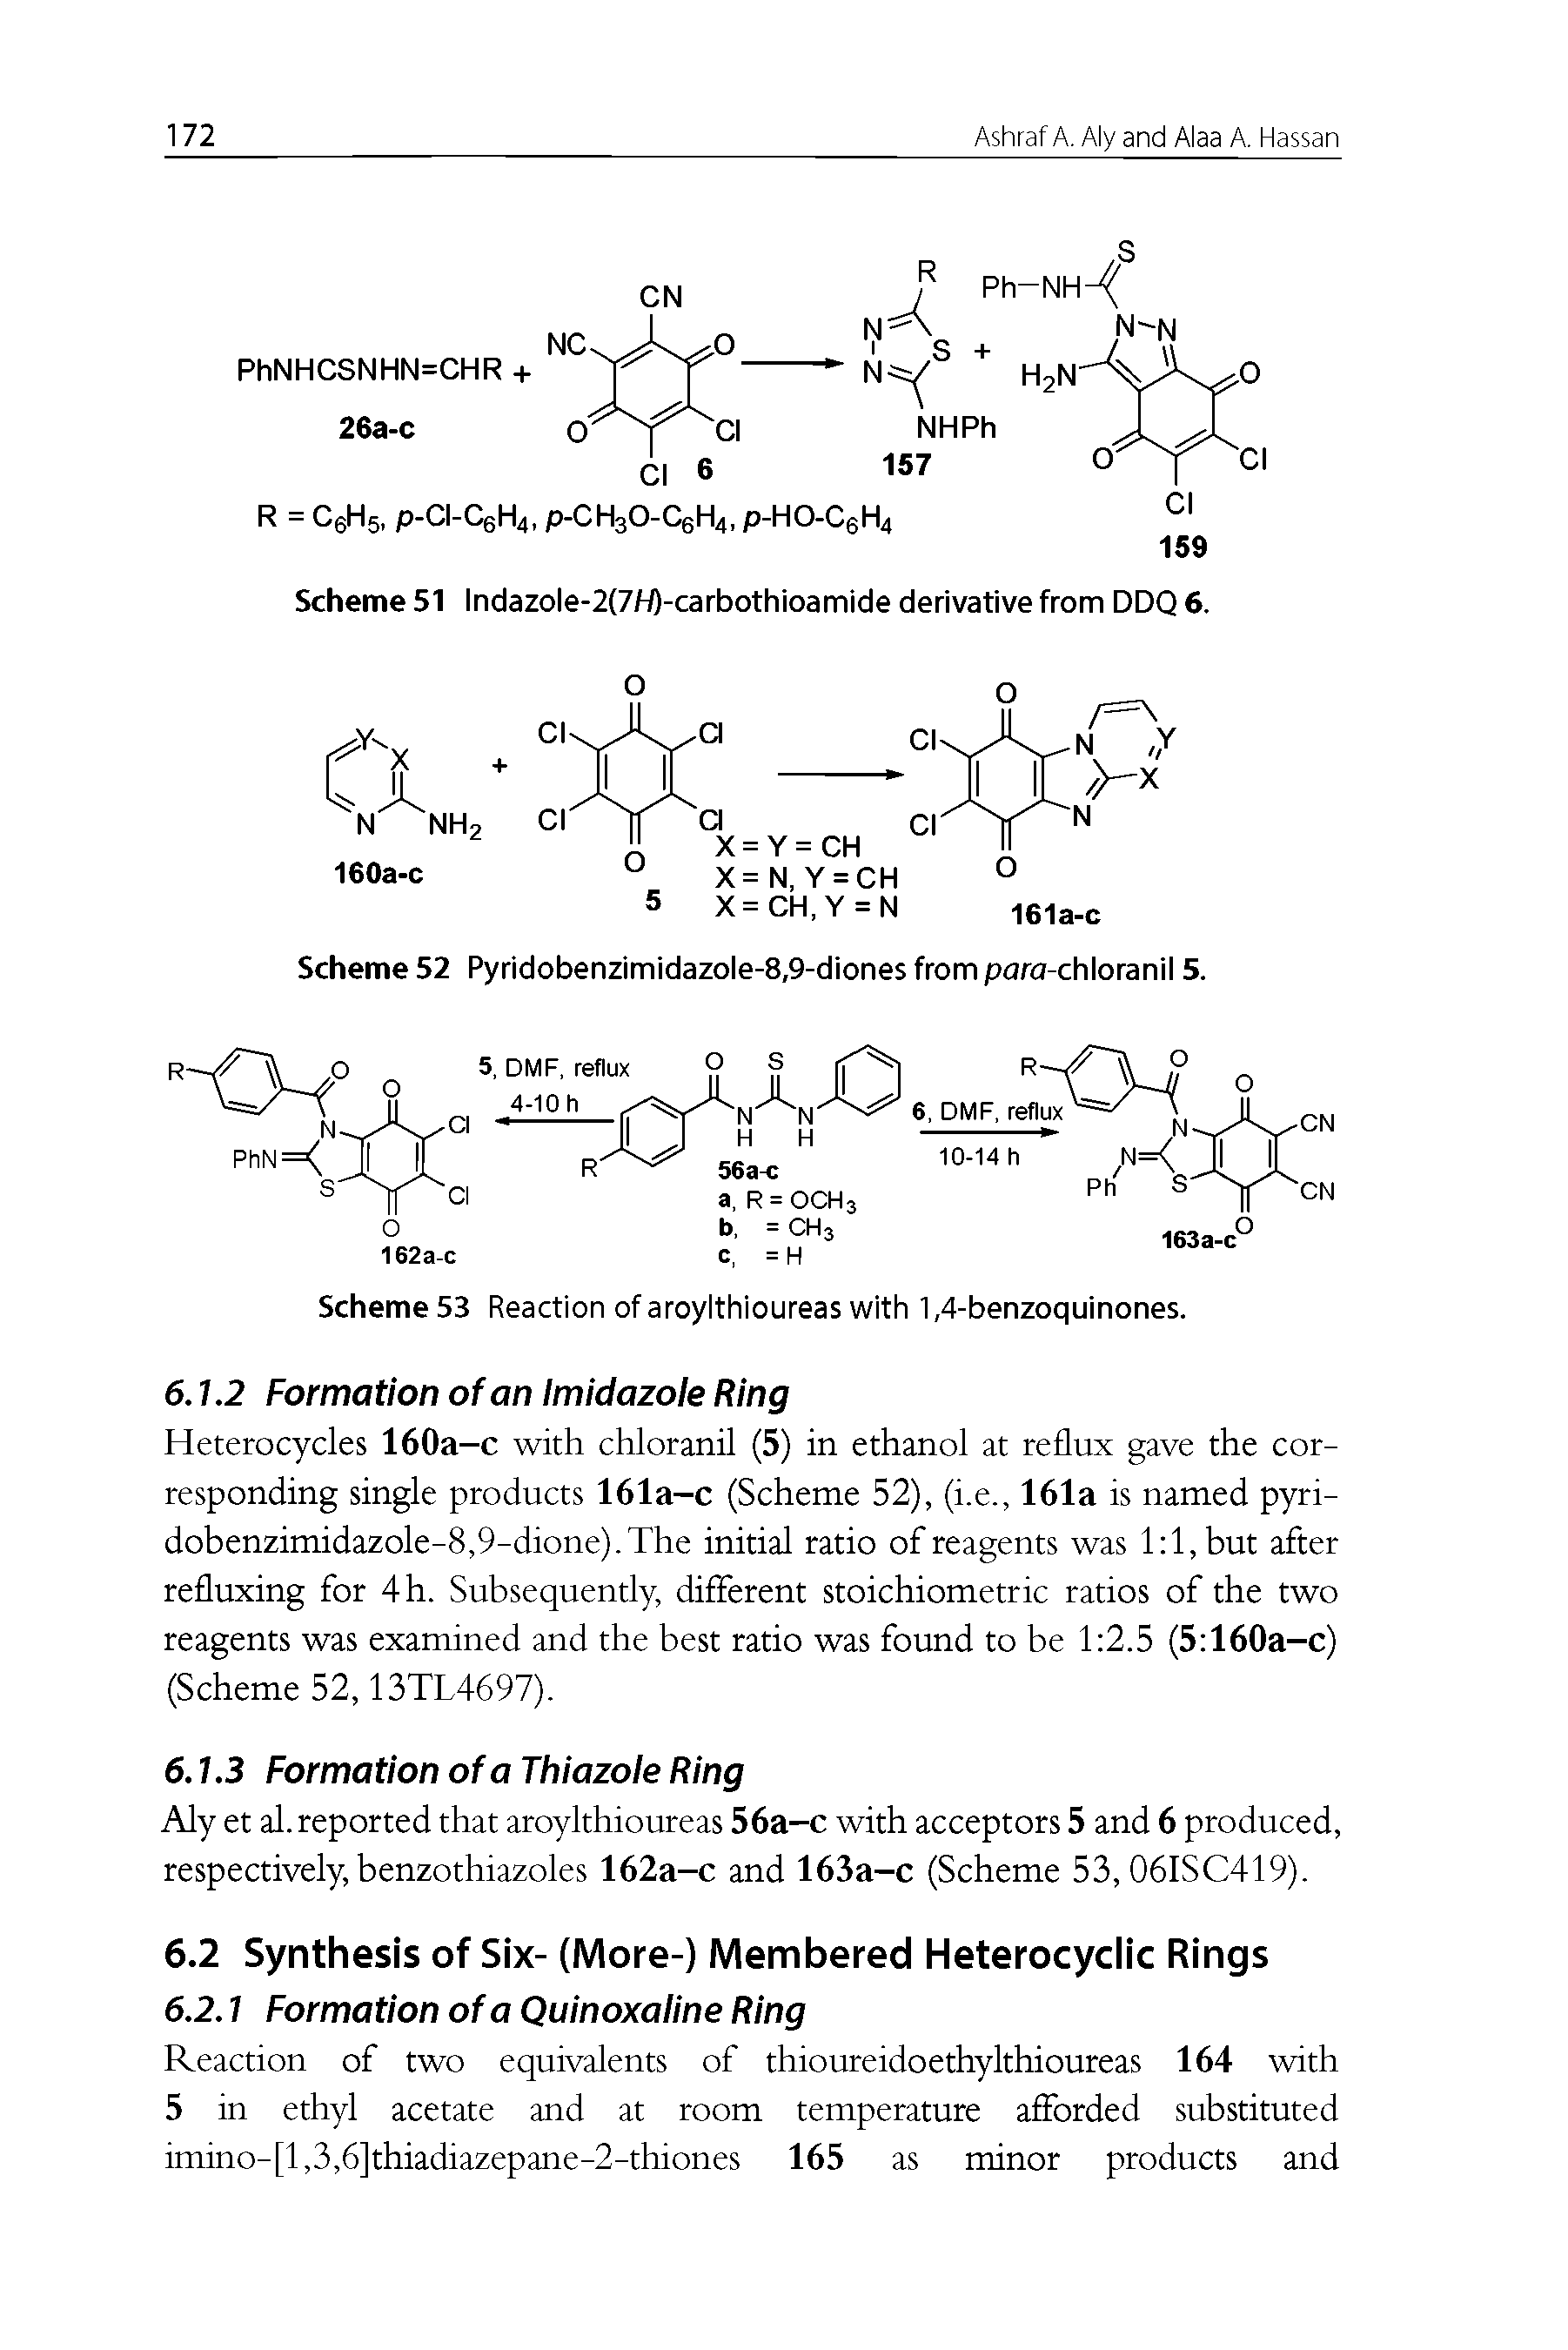 Scheme 52 Pyridobenzimidazole-8,9-diones from para-chloranil 5.